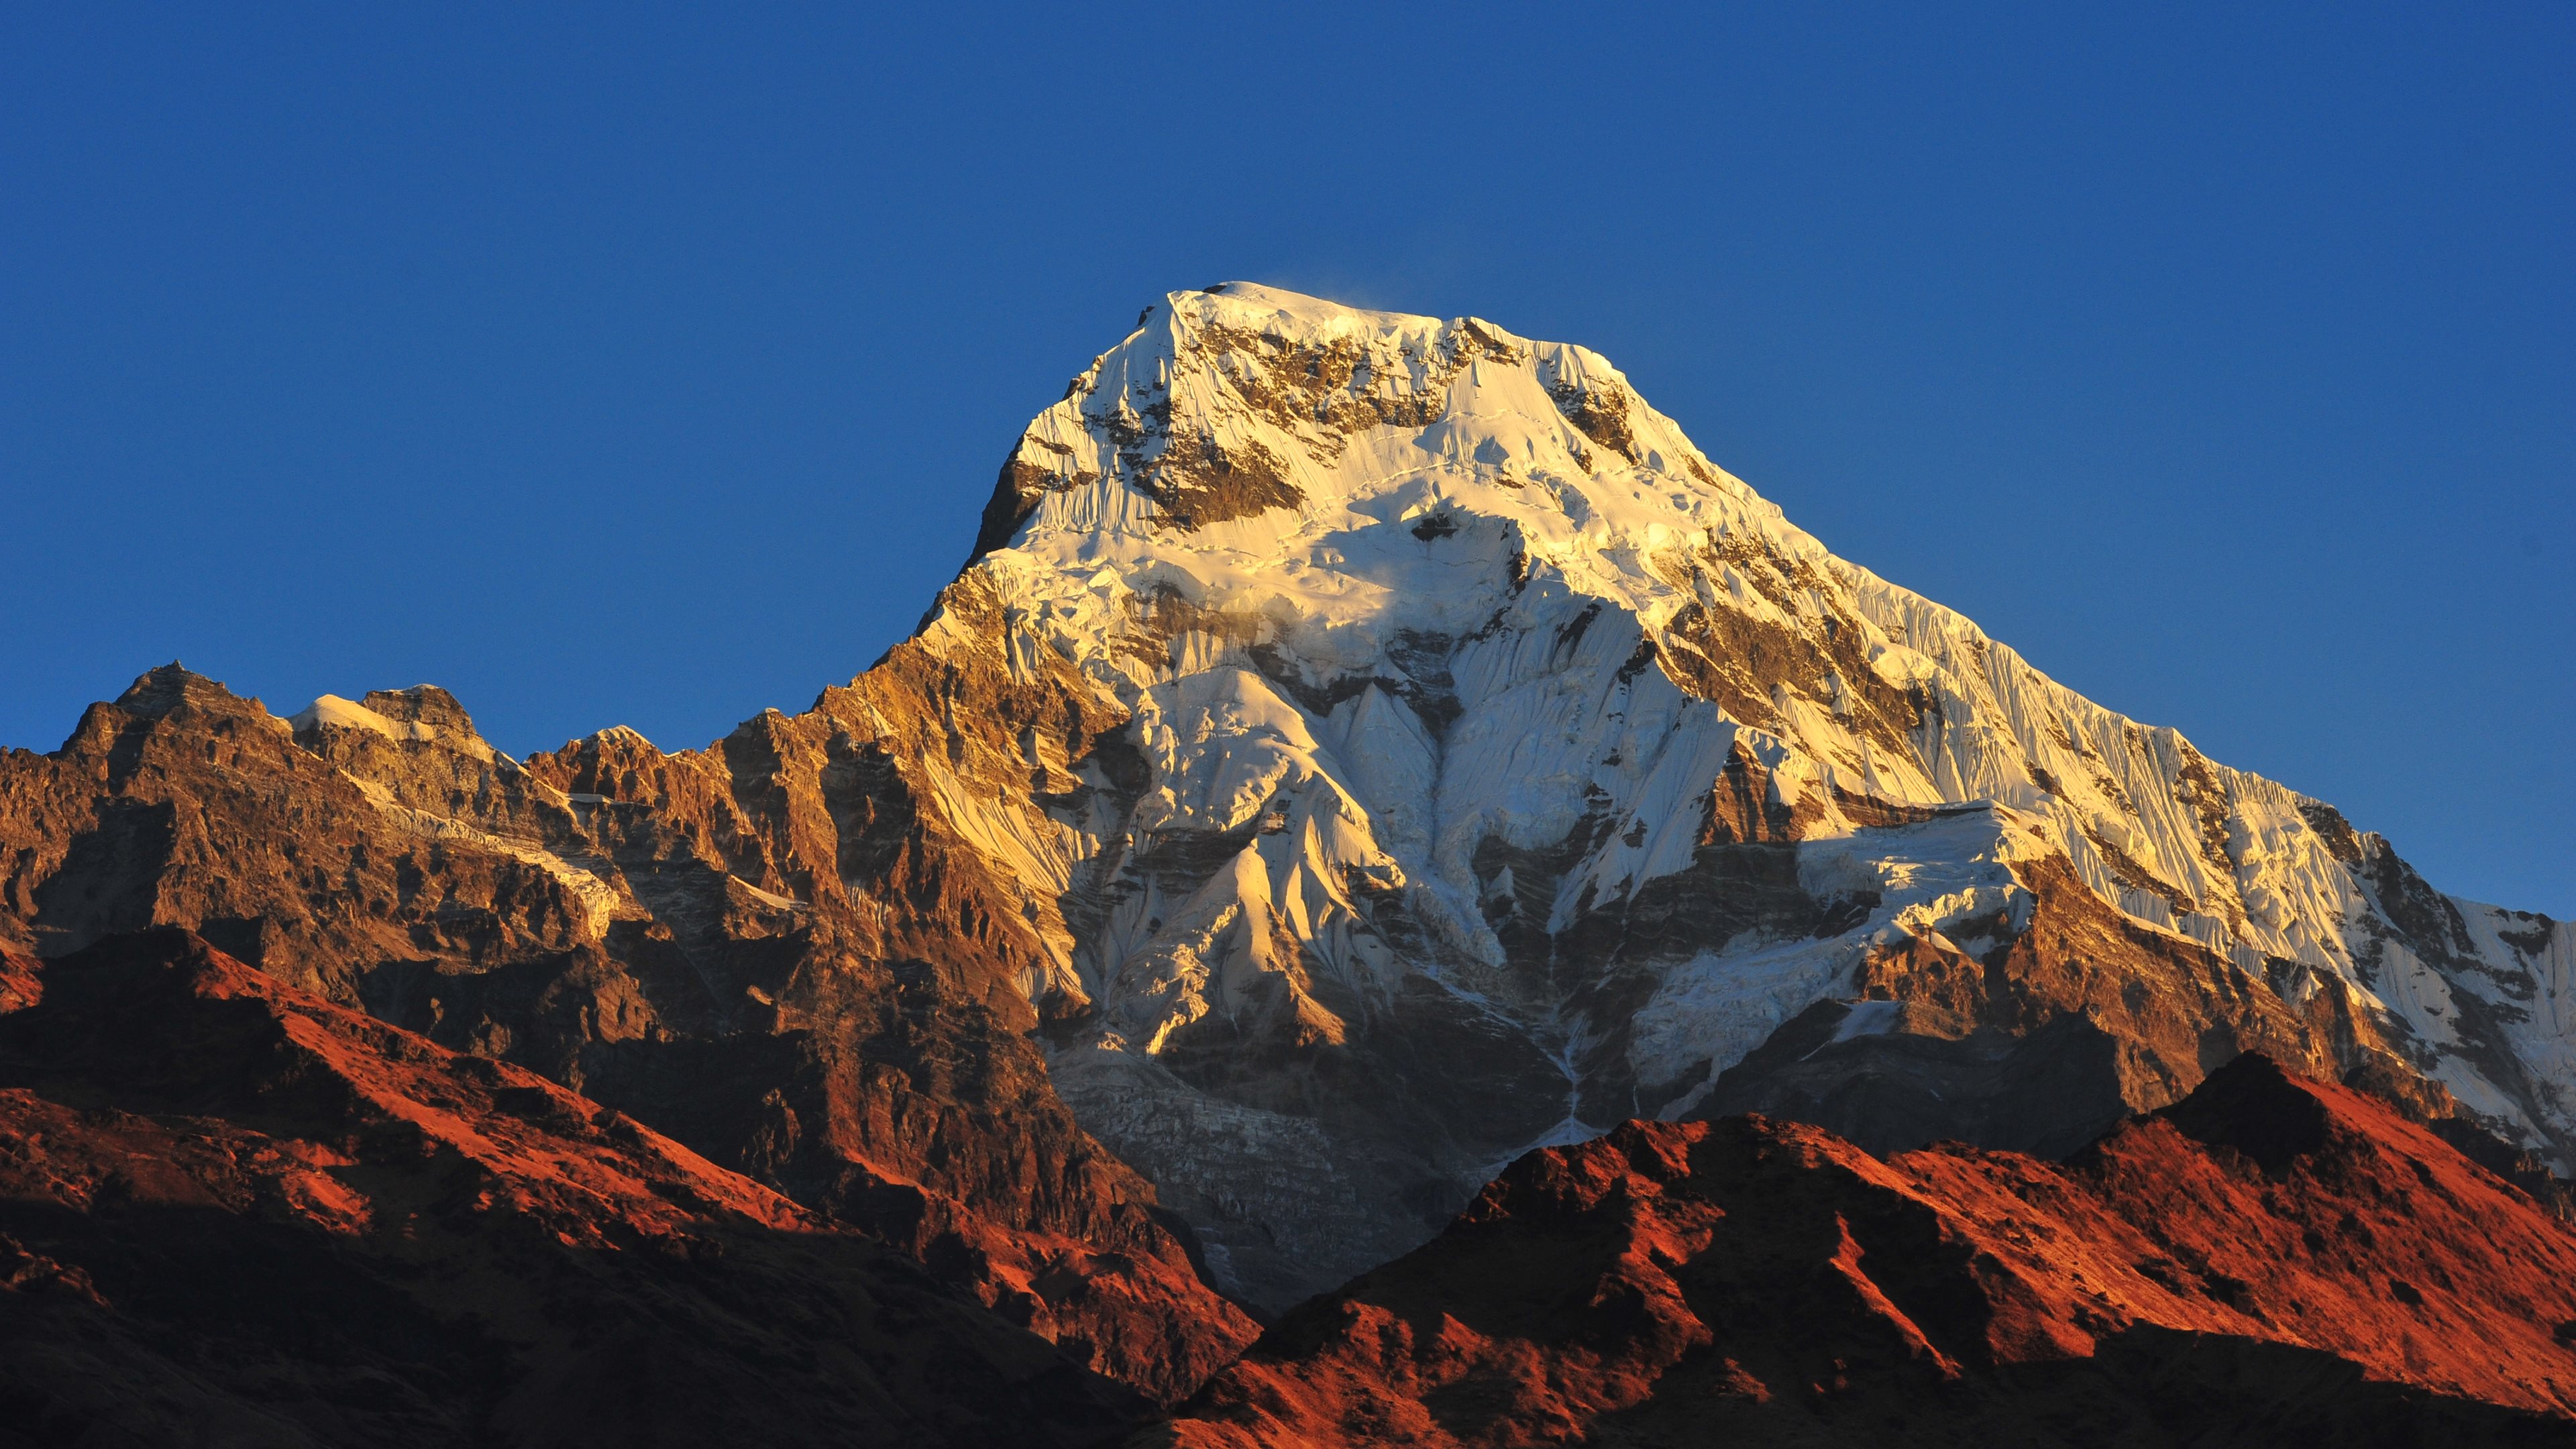 Annapurna Massif Mountain Range Nepal 4k, HD Nature, 4k Wallpaper, Image, Background, Photo and Picture